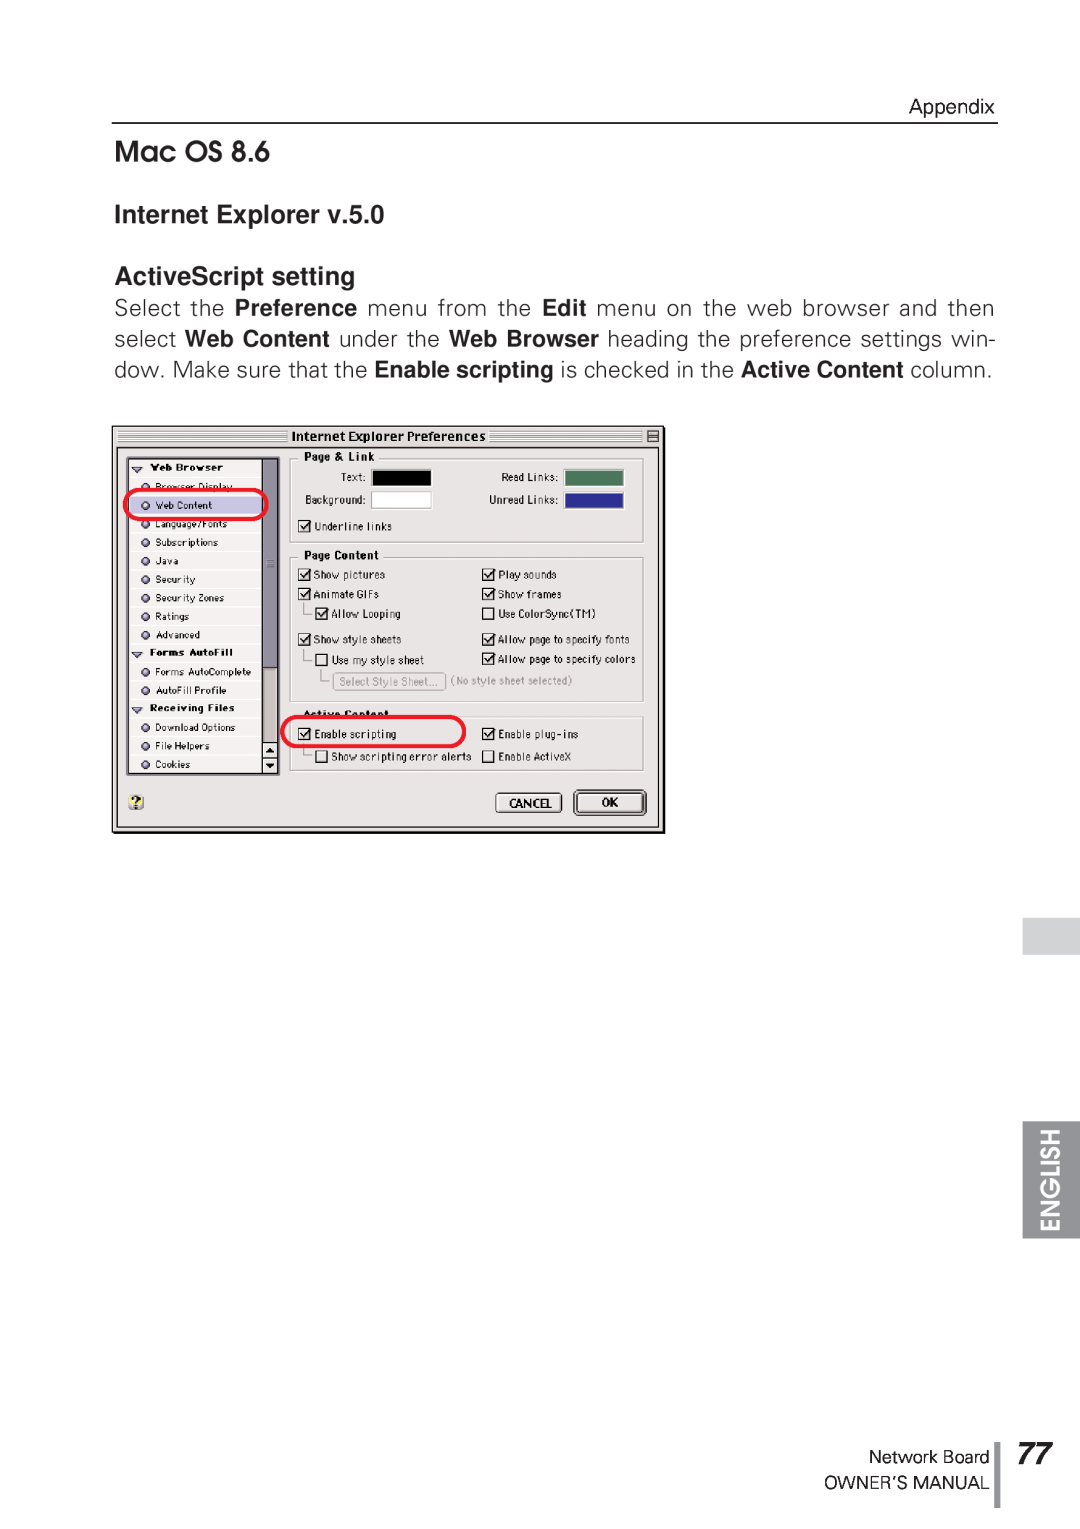 Eiki MD13NET owner manual Mac OS, English, Network Board OWNER’S MANUAL 